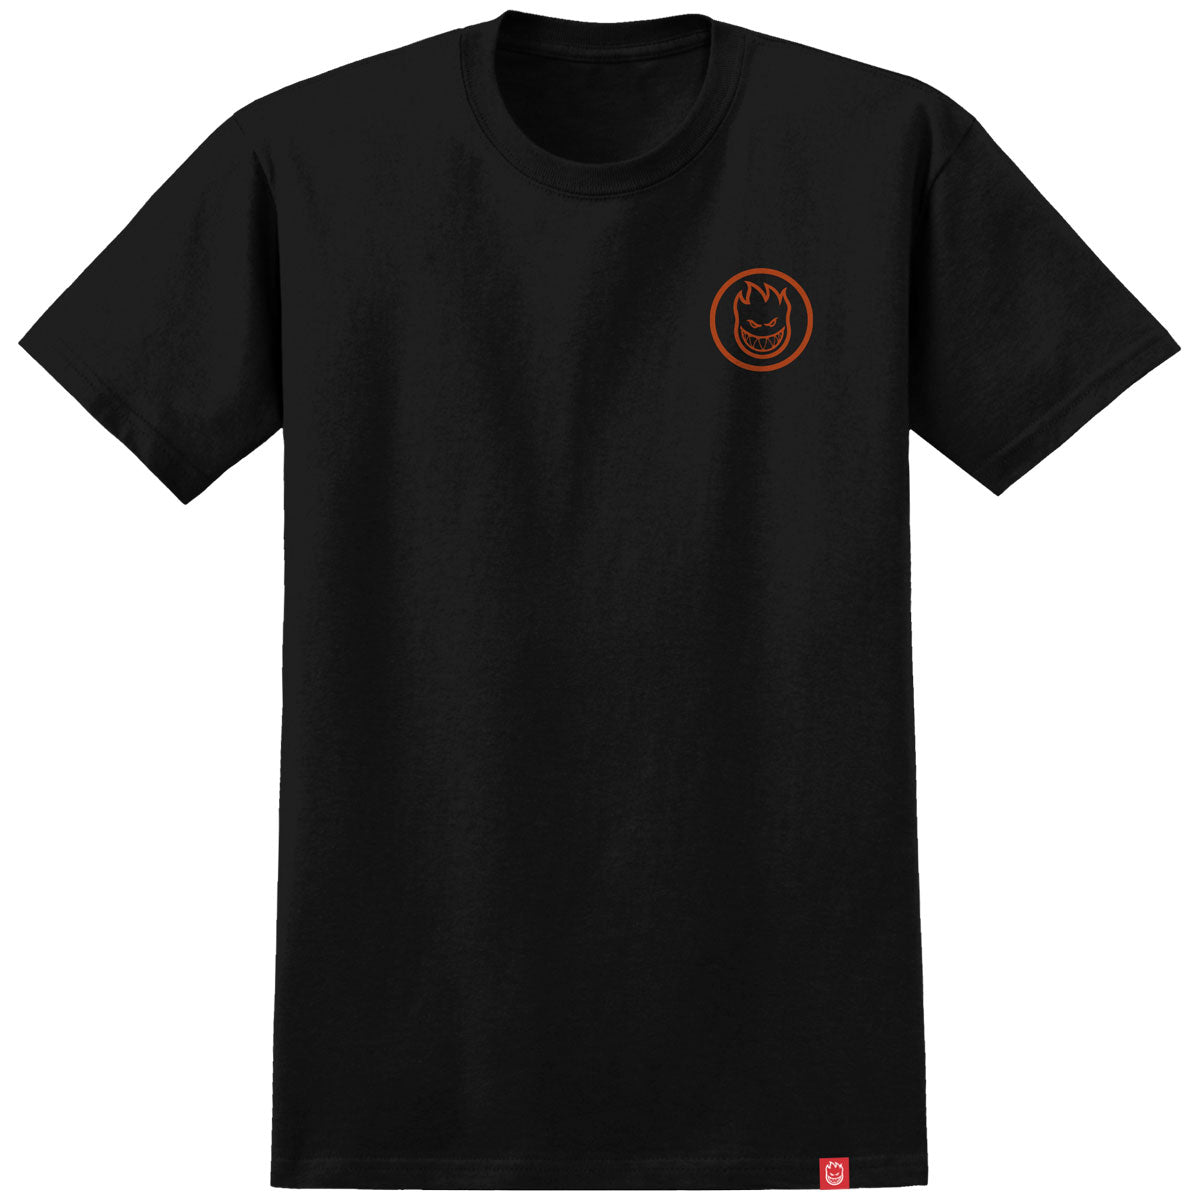 Spitfire Swirled Classic T-Shirt - Black/Burnt Orange image 2